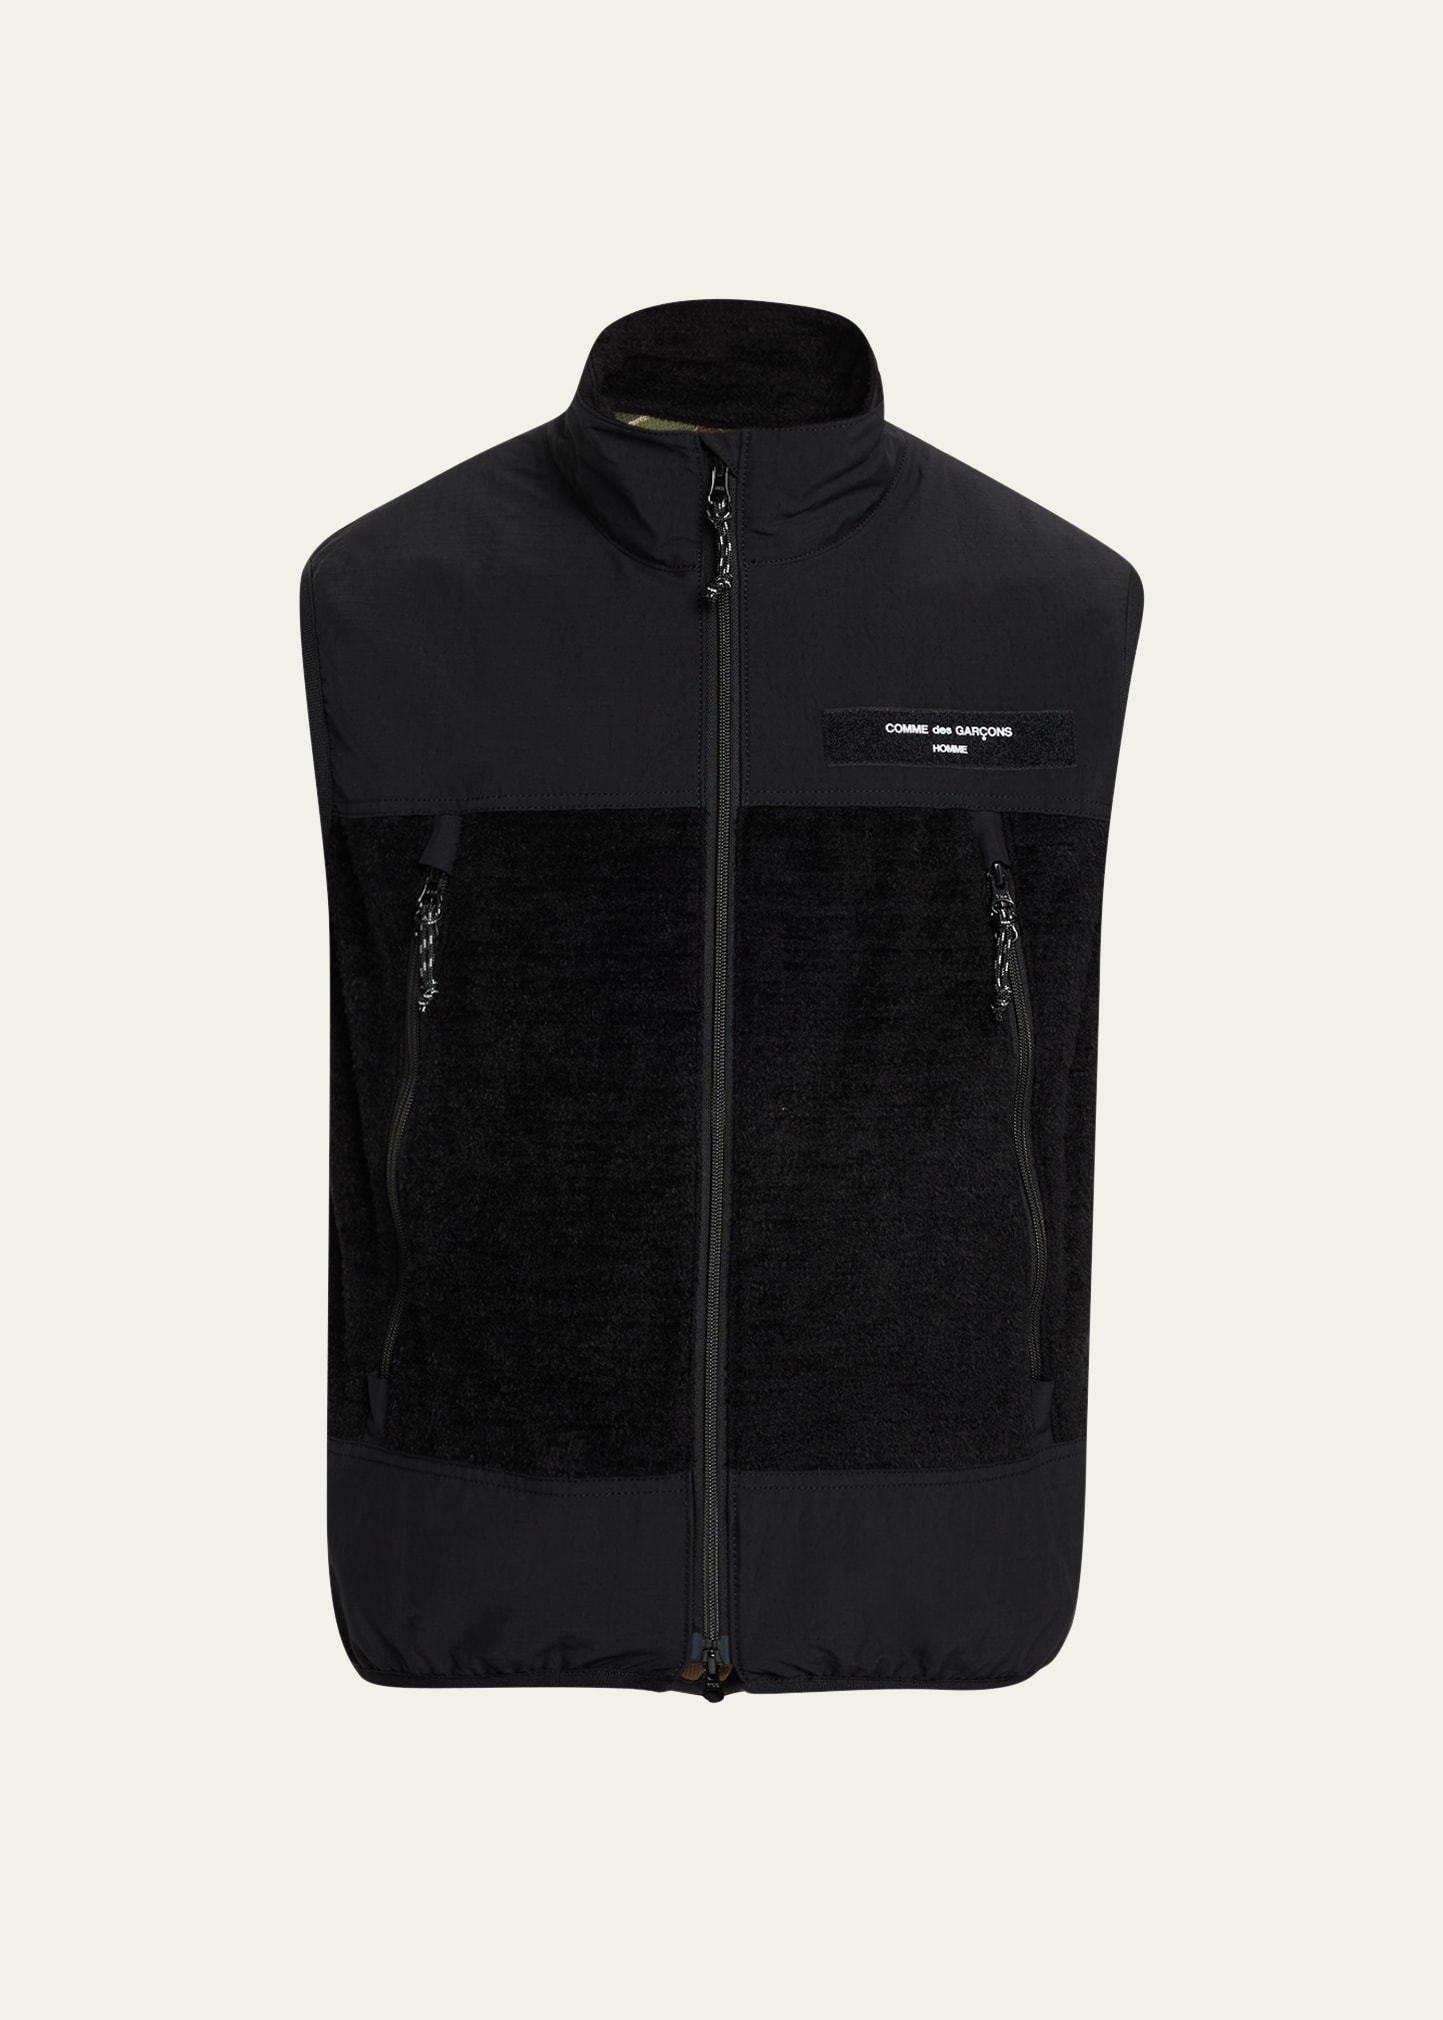 Cdg Homme Men's Patagonia Fleece And Ripstop Vest In 1 - Black